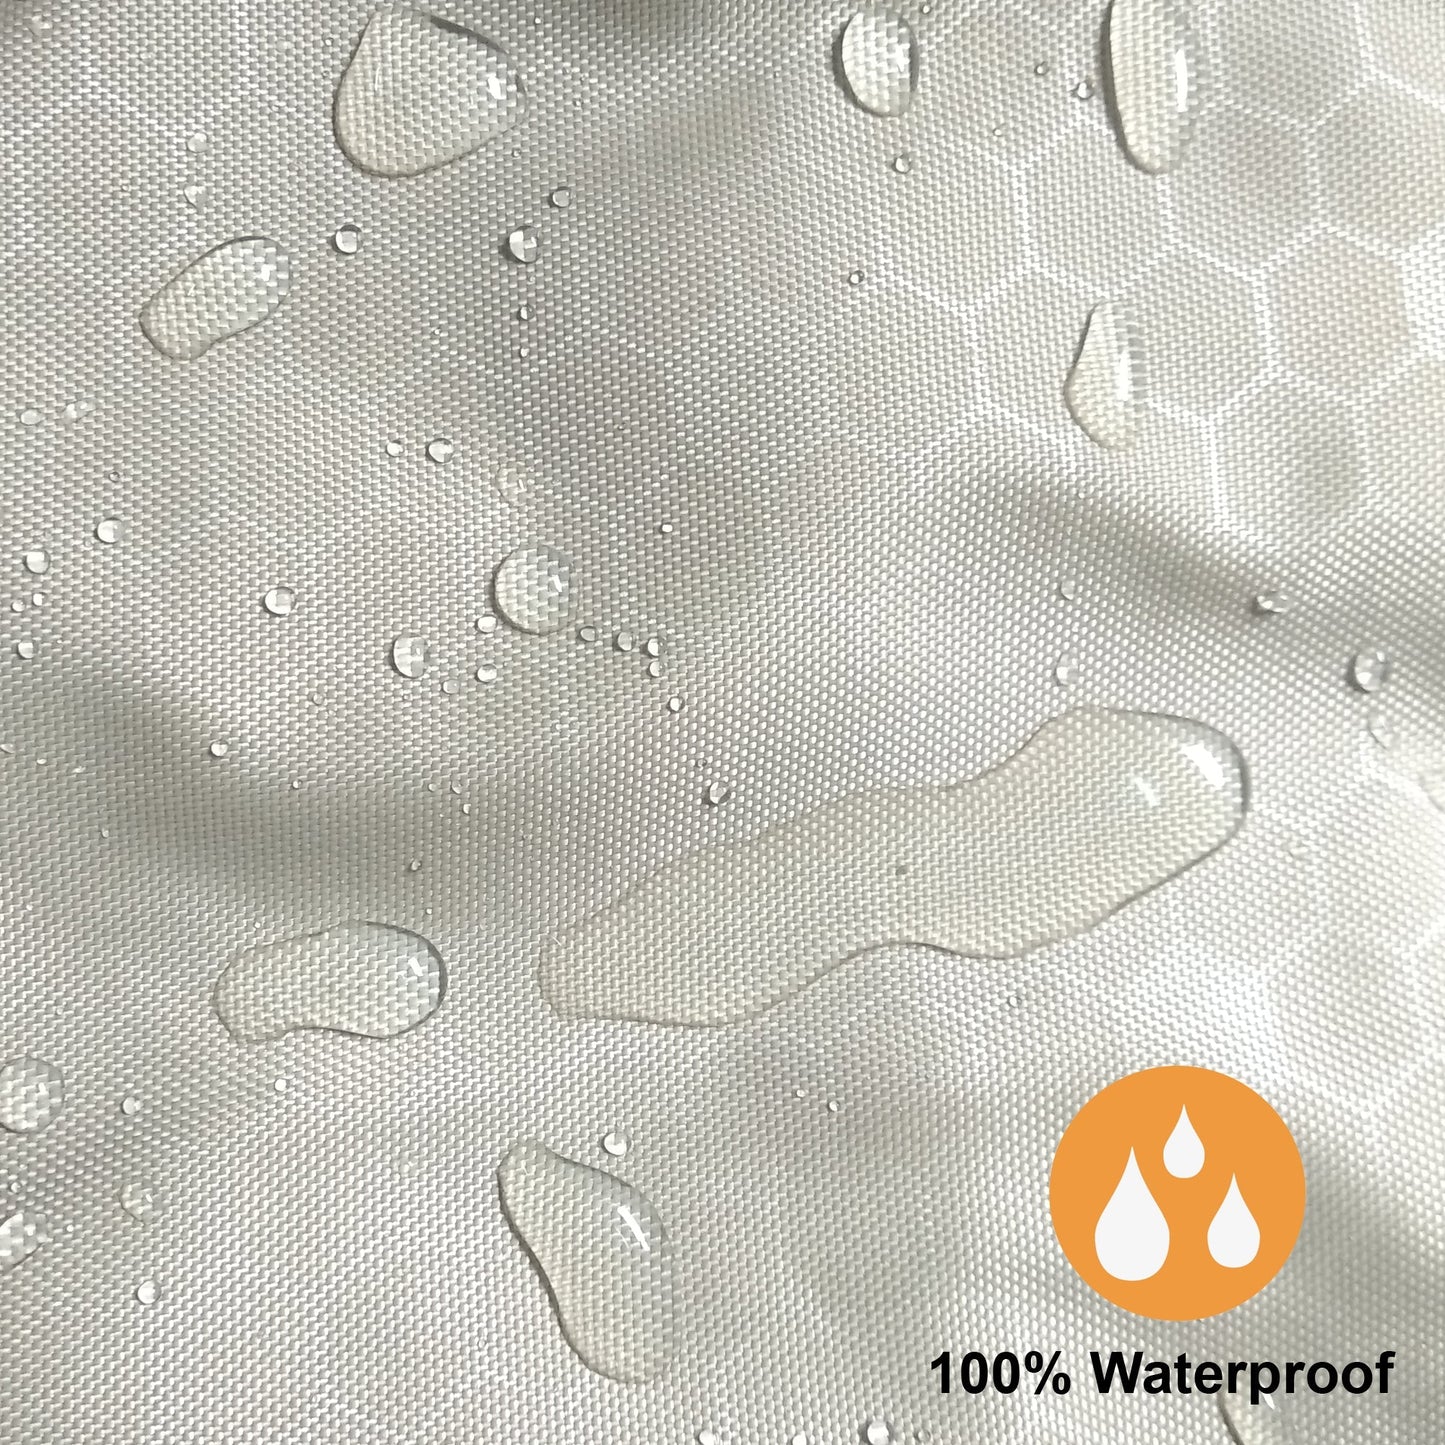 Oshotto Brown 100% Waterproof Car Body Cover with Mirror Pockets For Mahindra Bolero